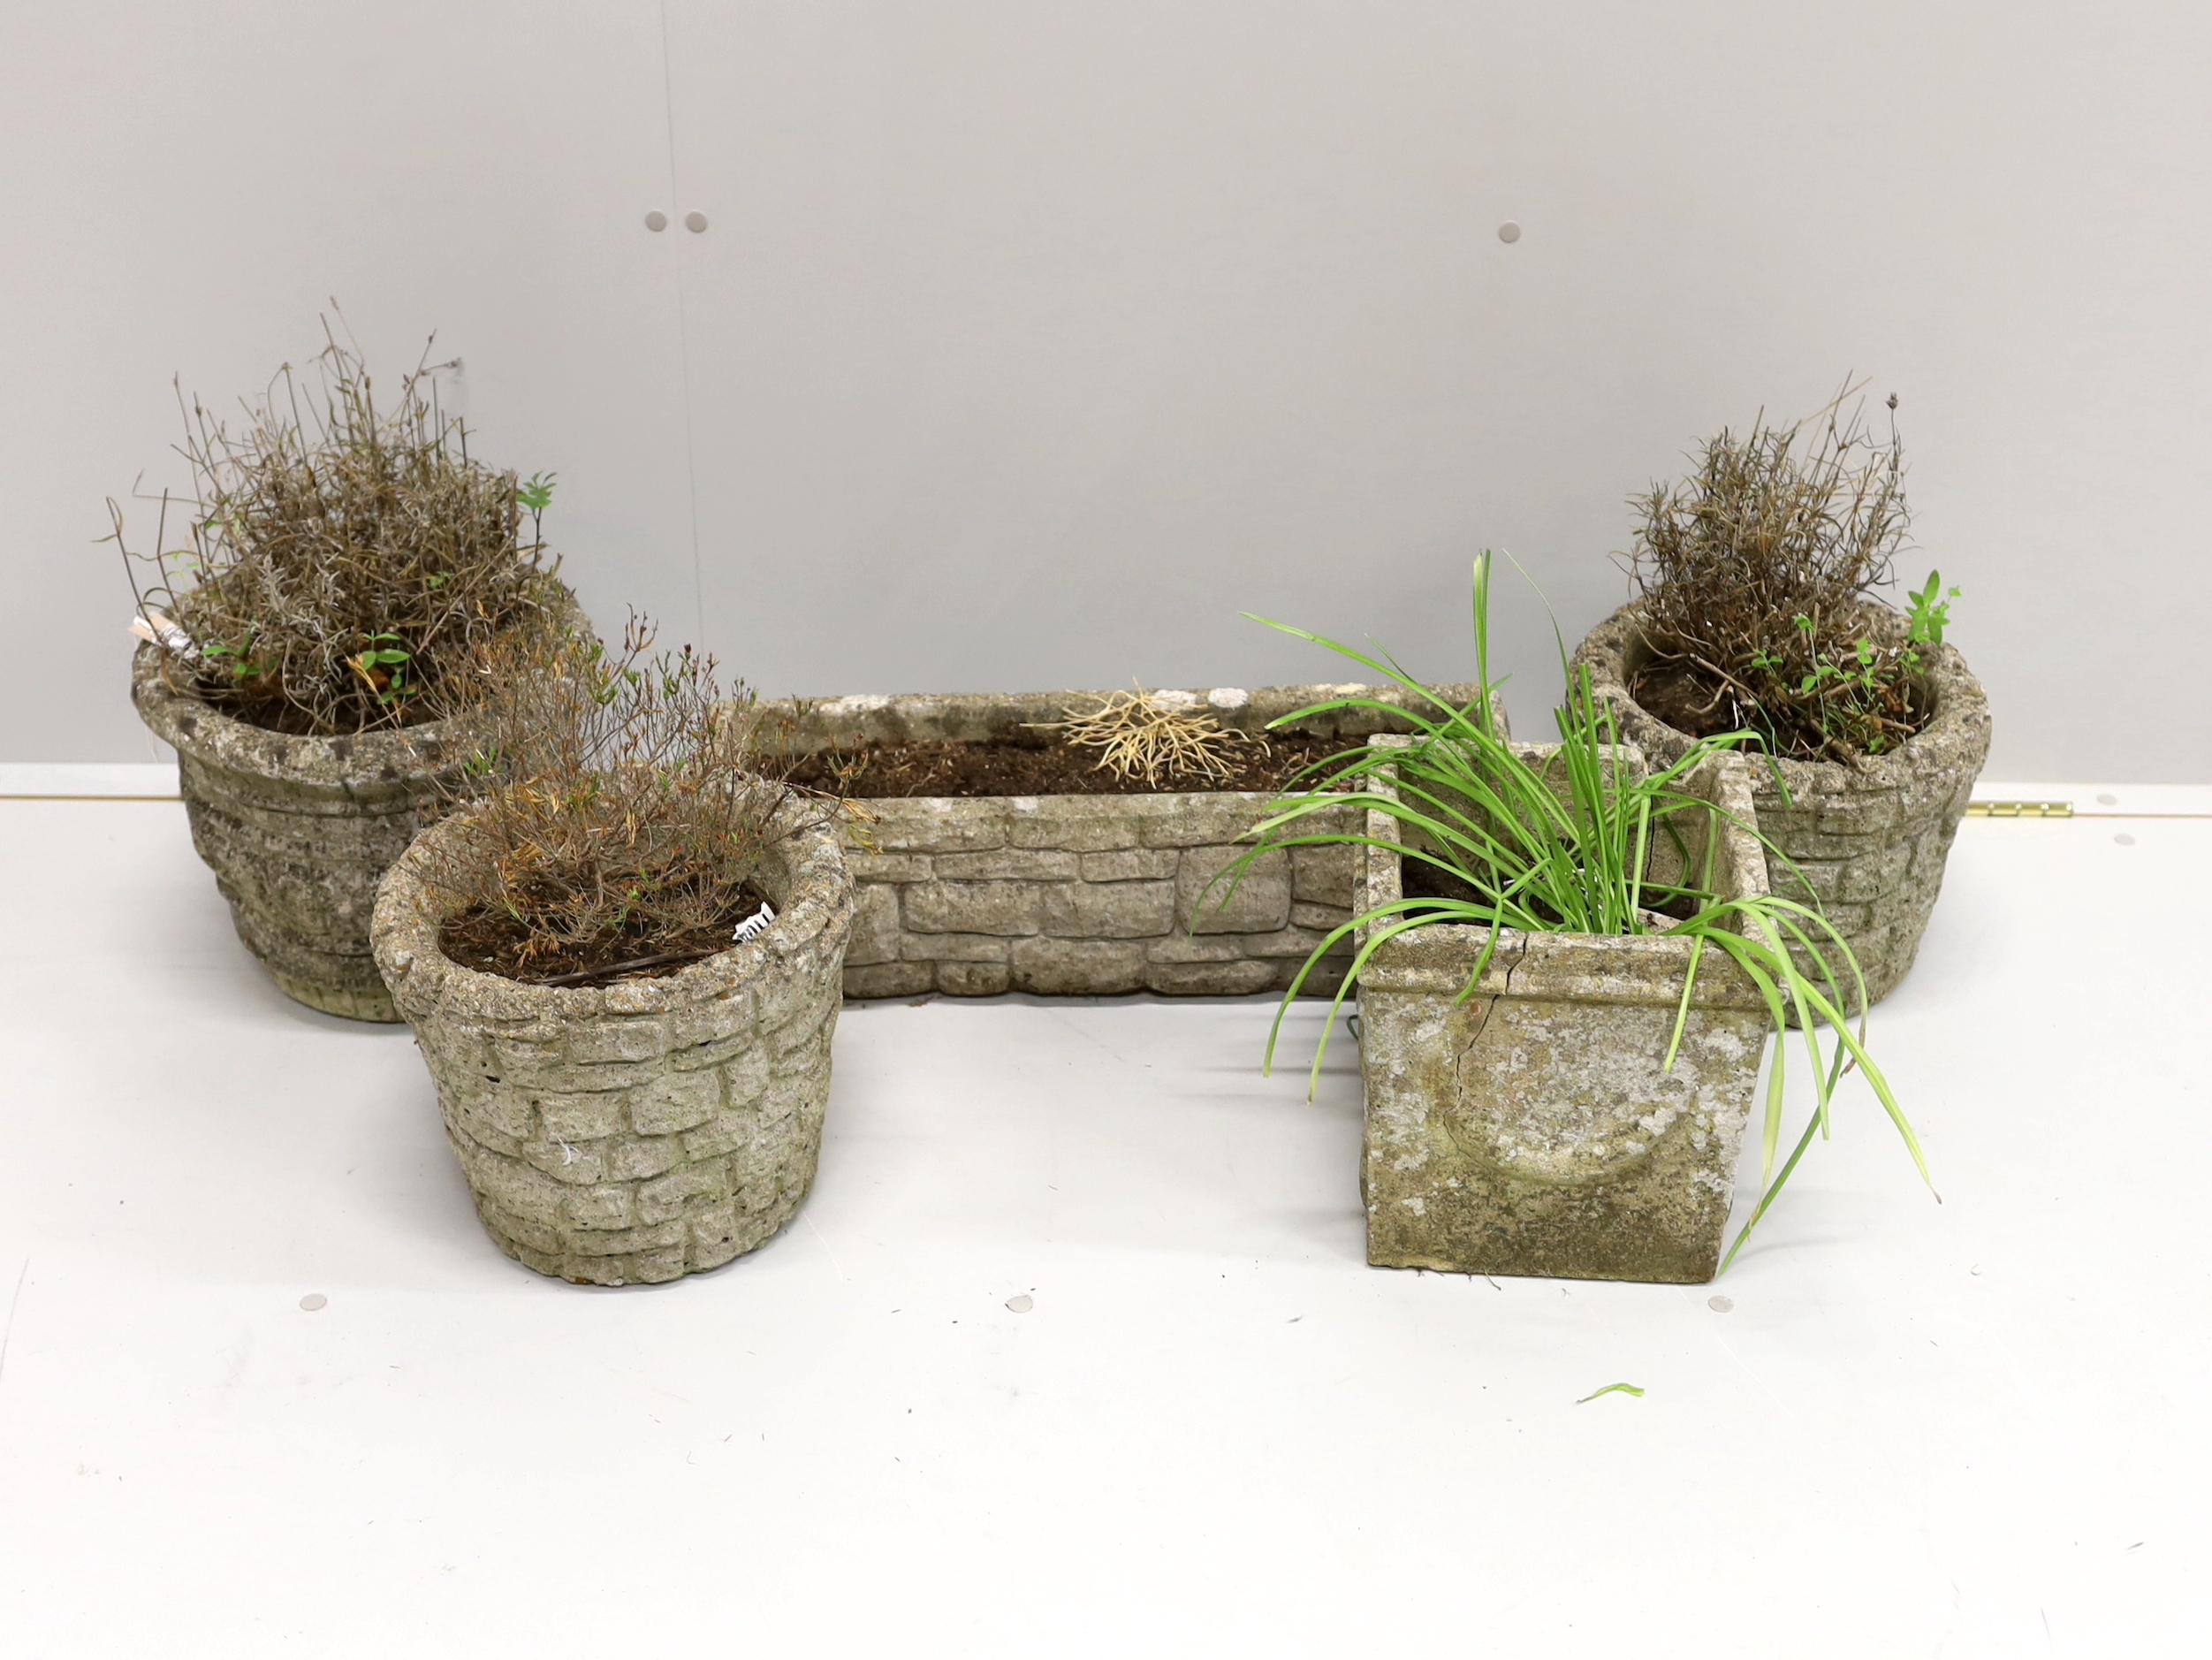 Five reconstituted stone garden planters